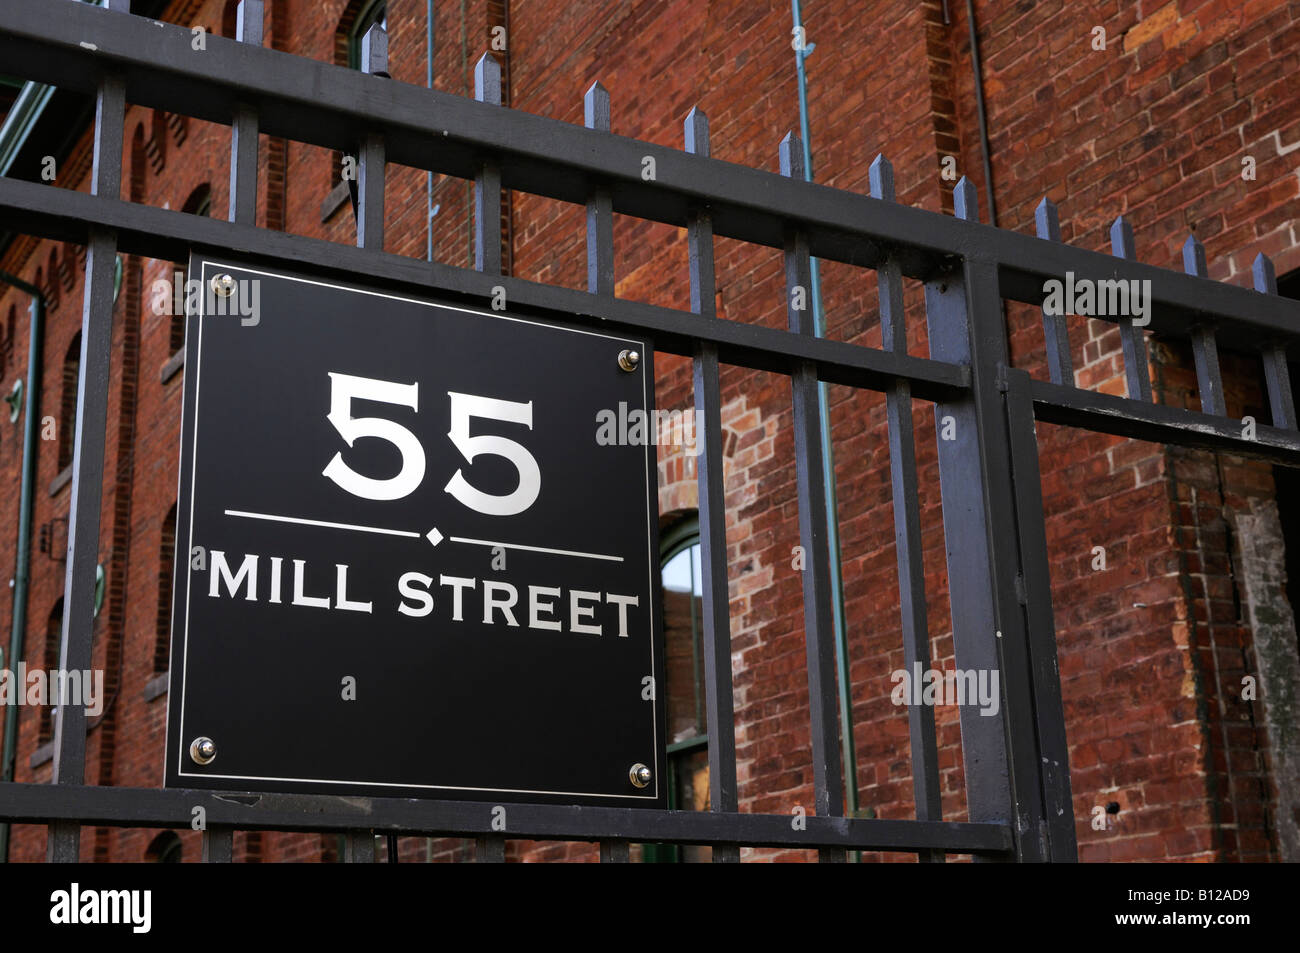 The Distillery address sign 55 Mill Street Stock Photo